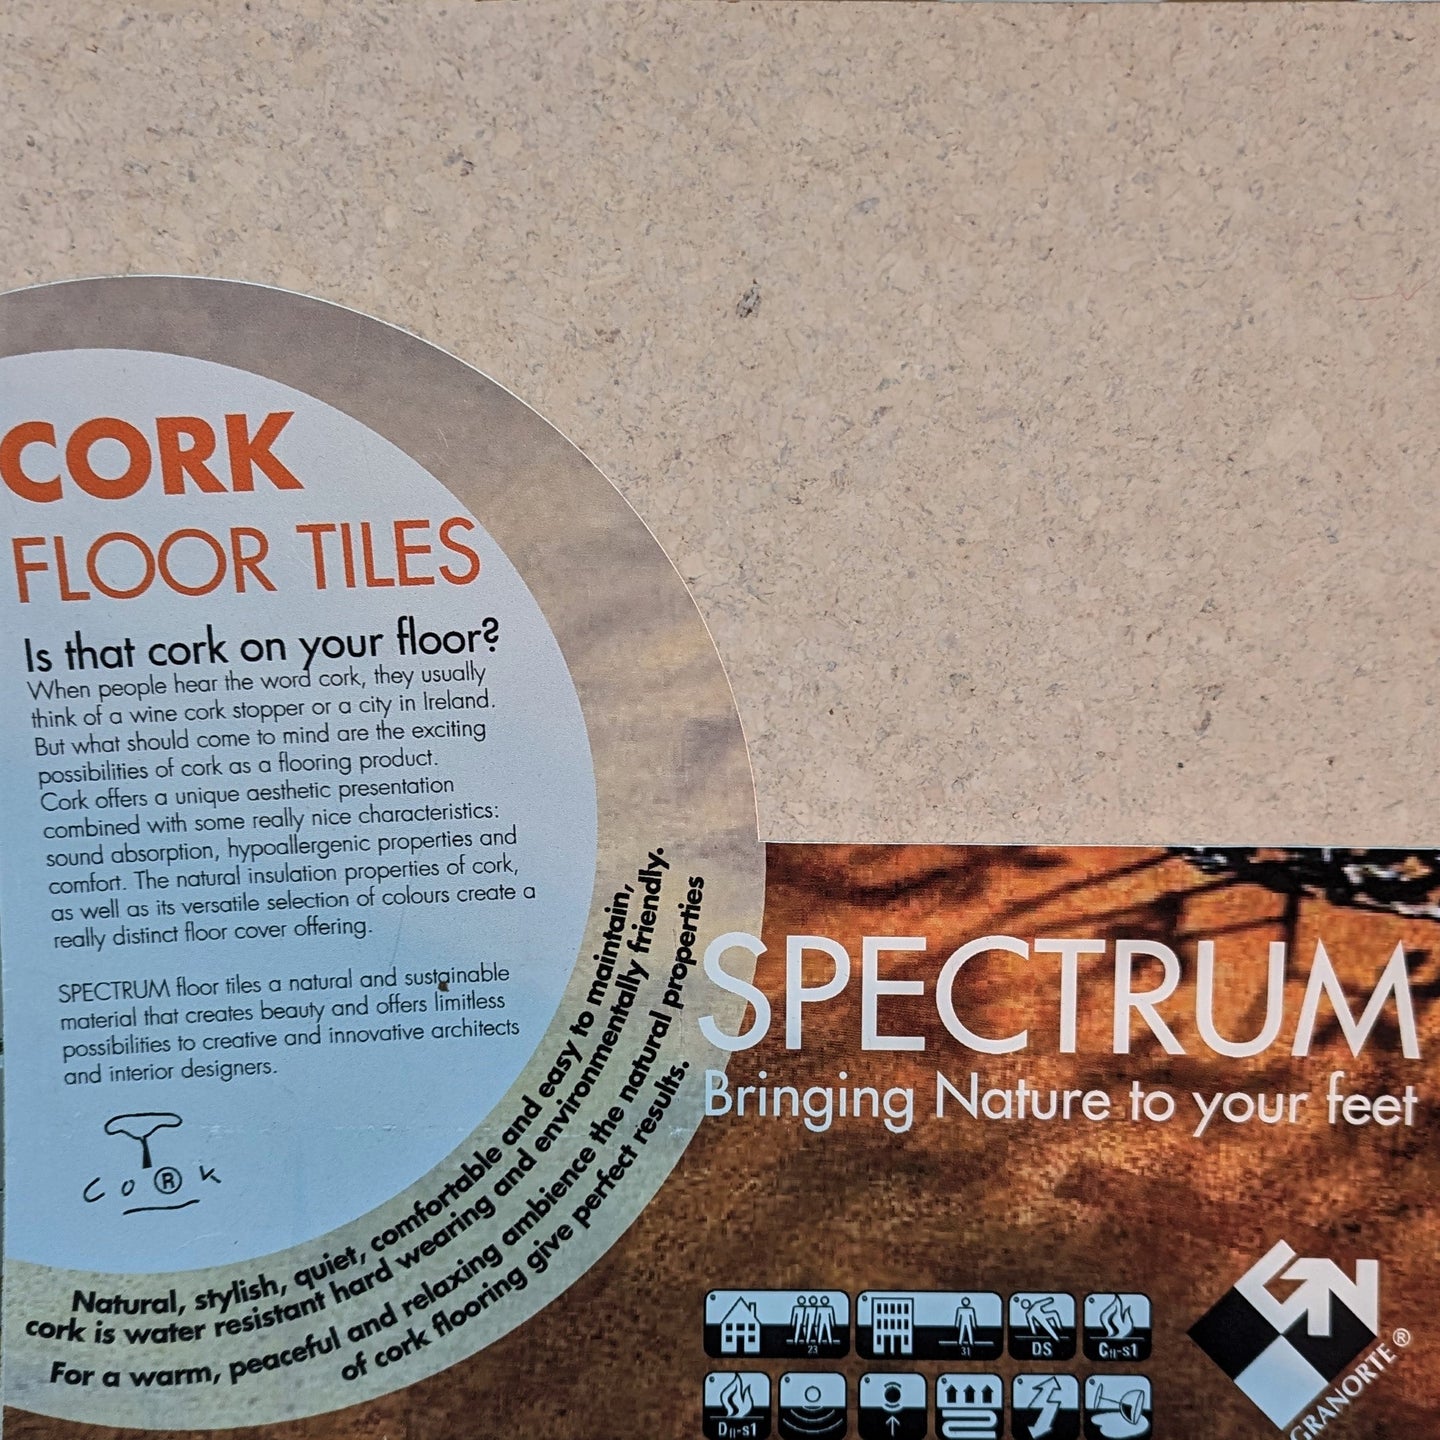 Cork floor glue down Flooring tiles Spectrum range suitable for bathrooms and kitchens